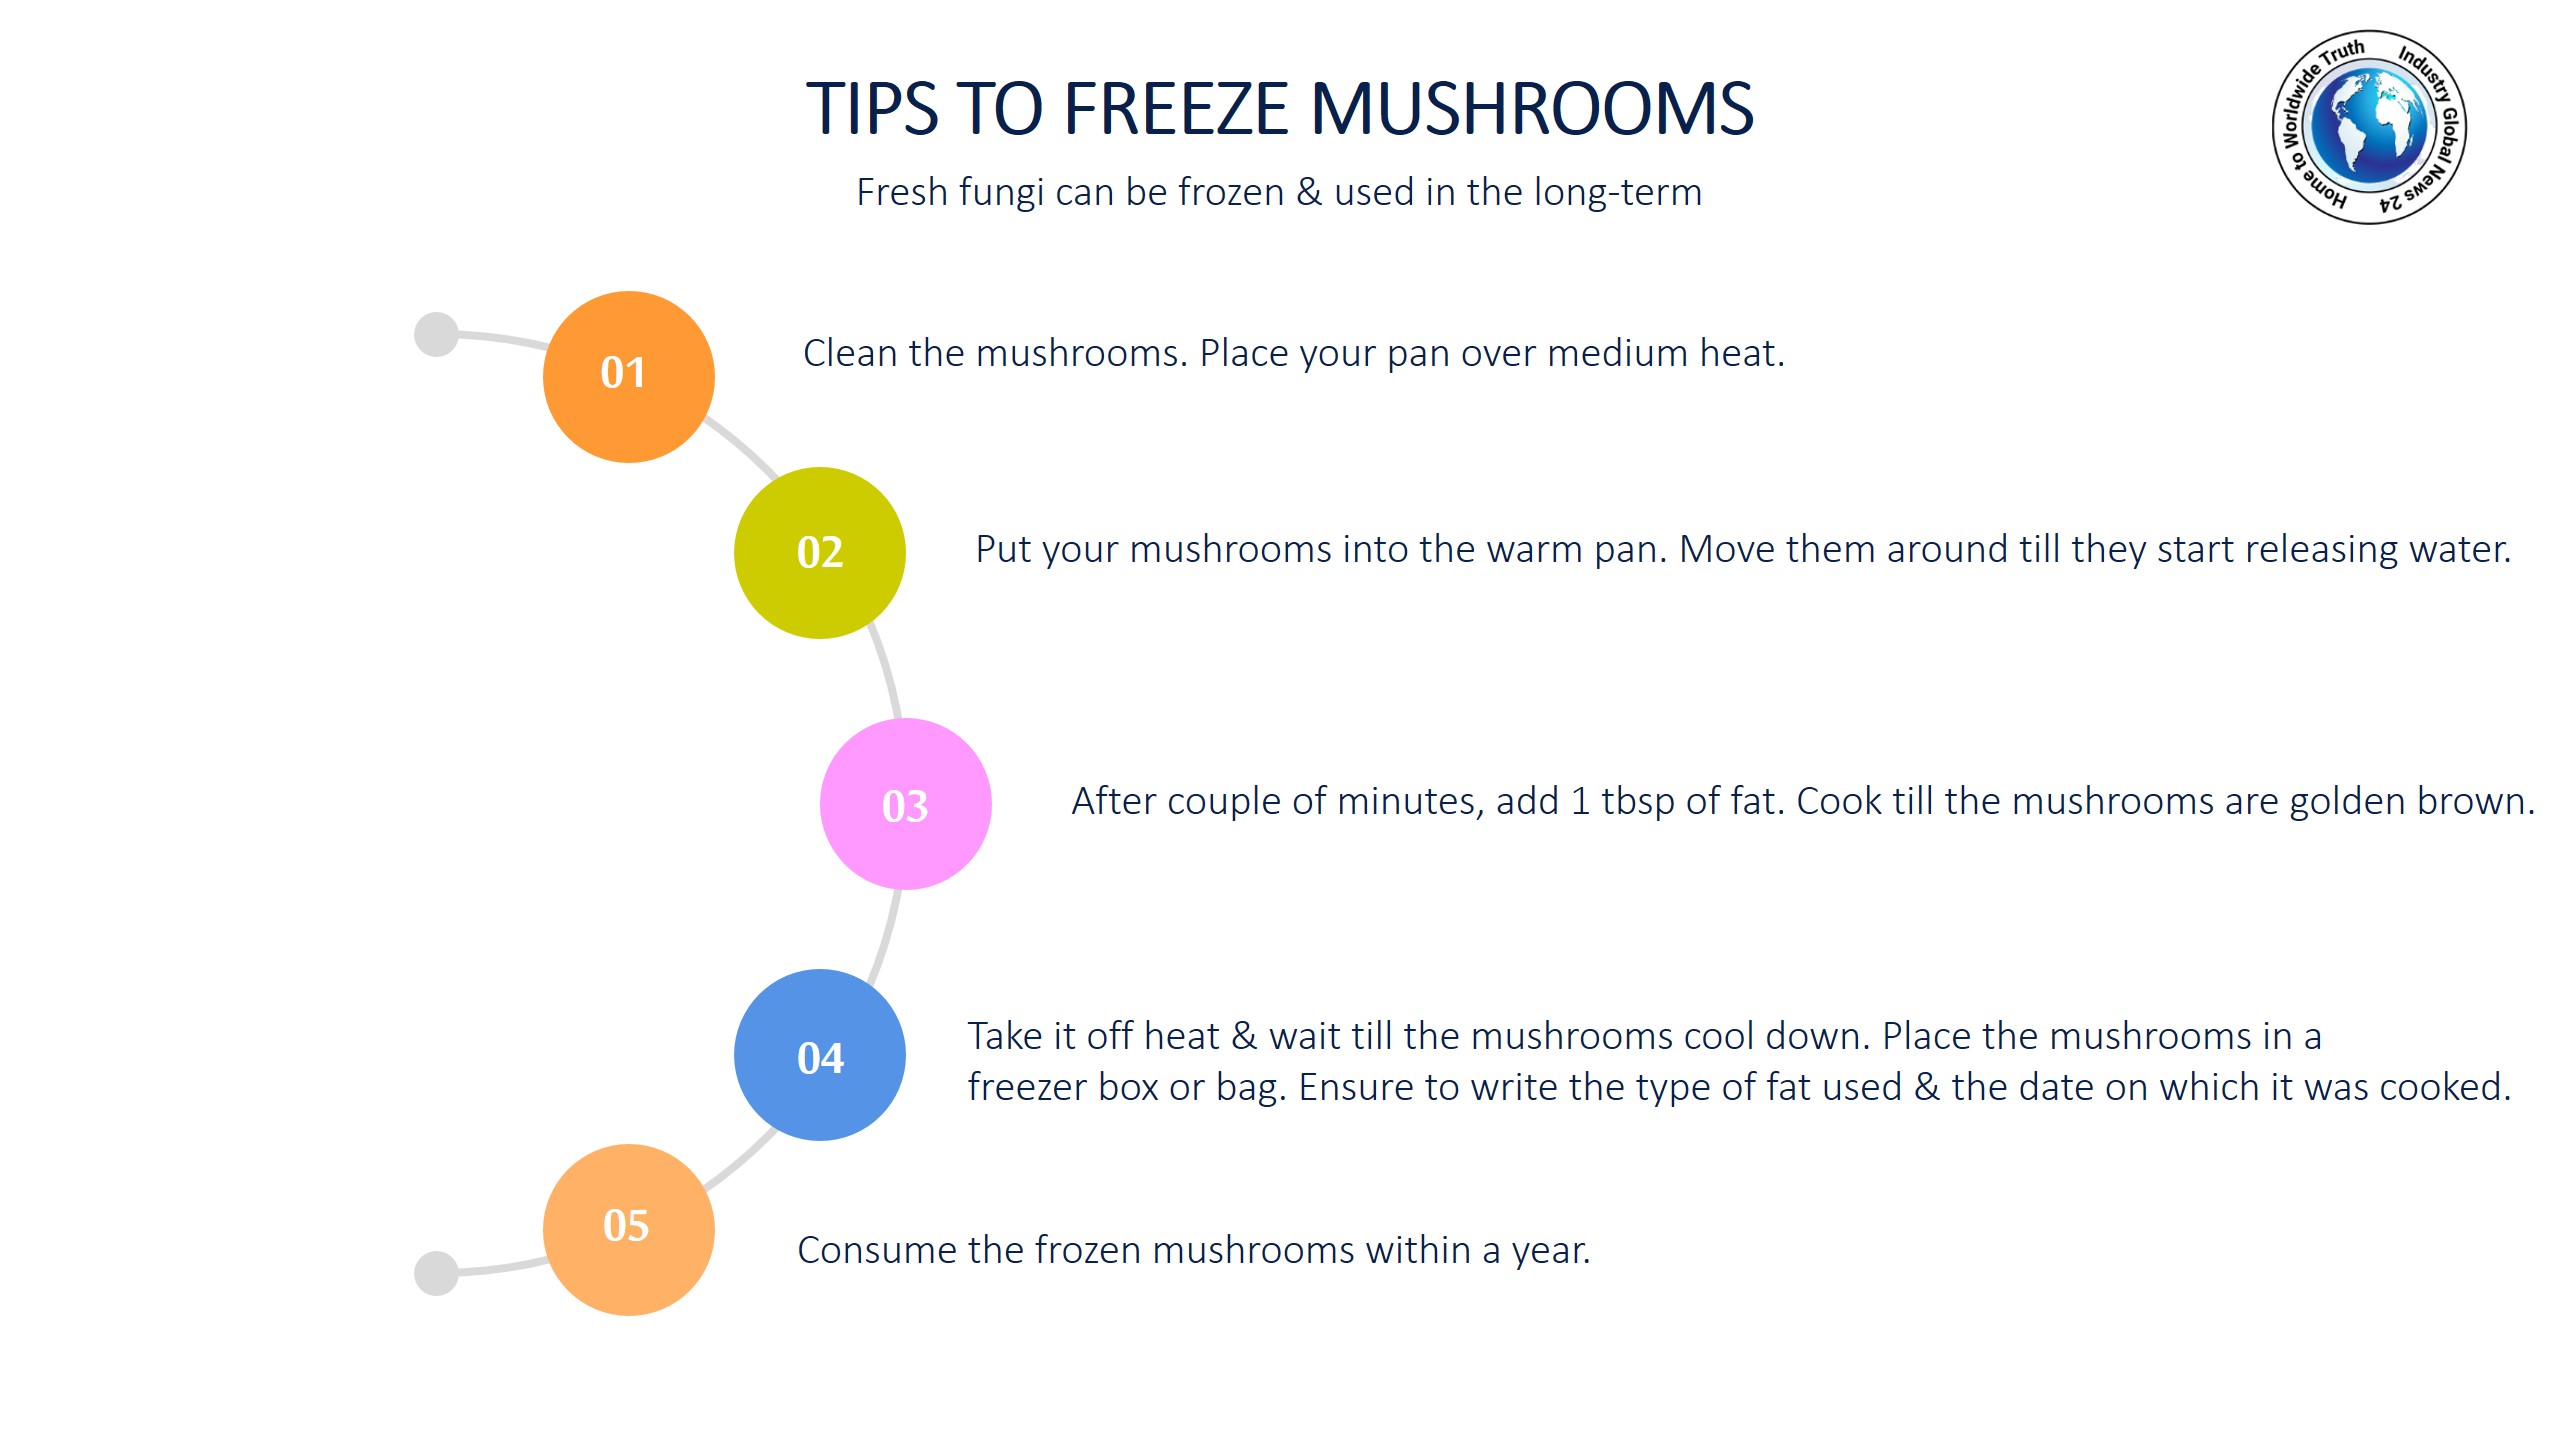 Tips to freeze mushrooms